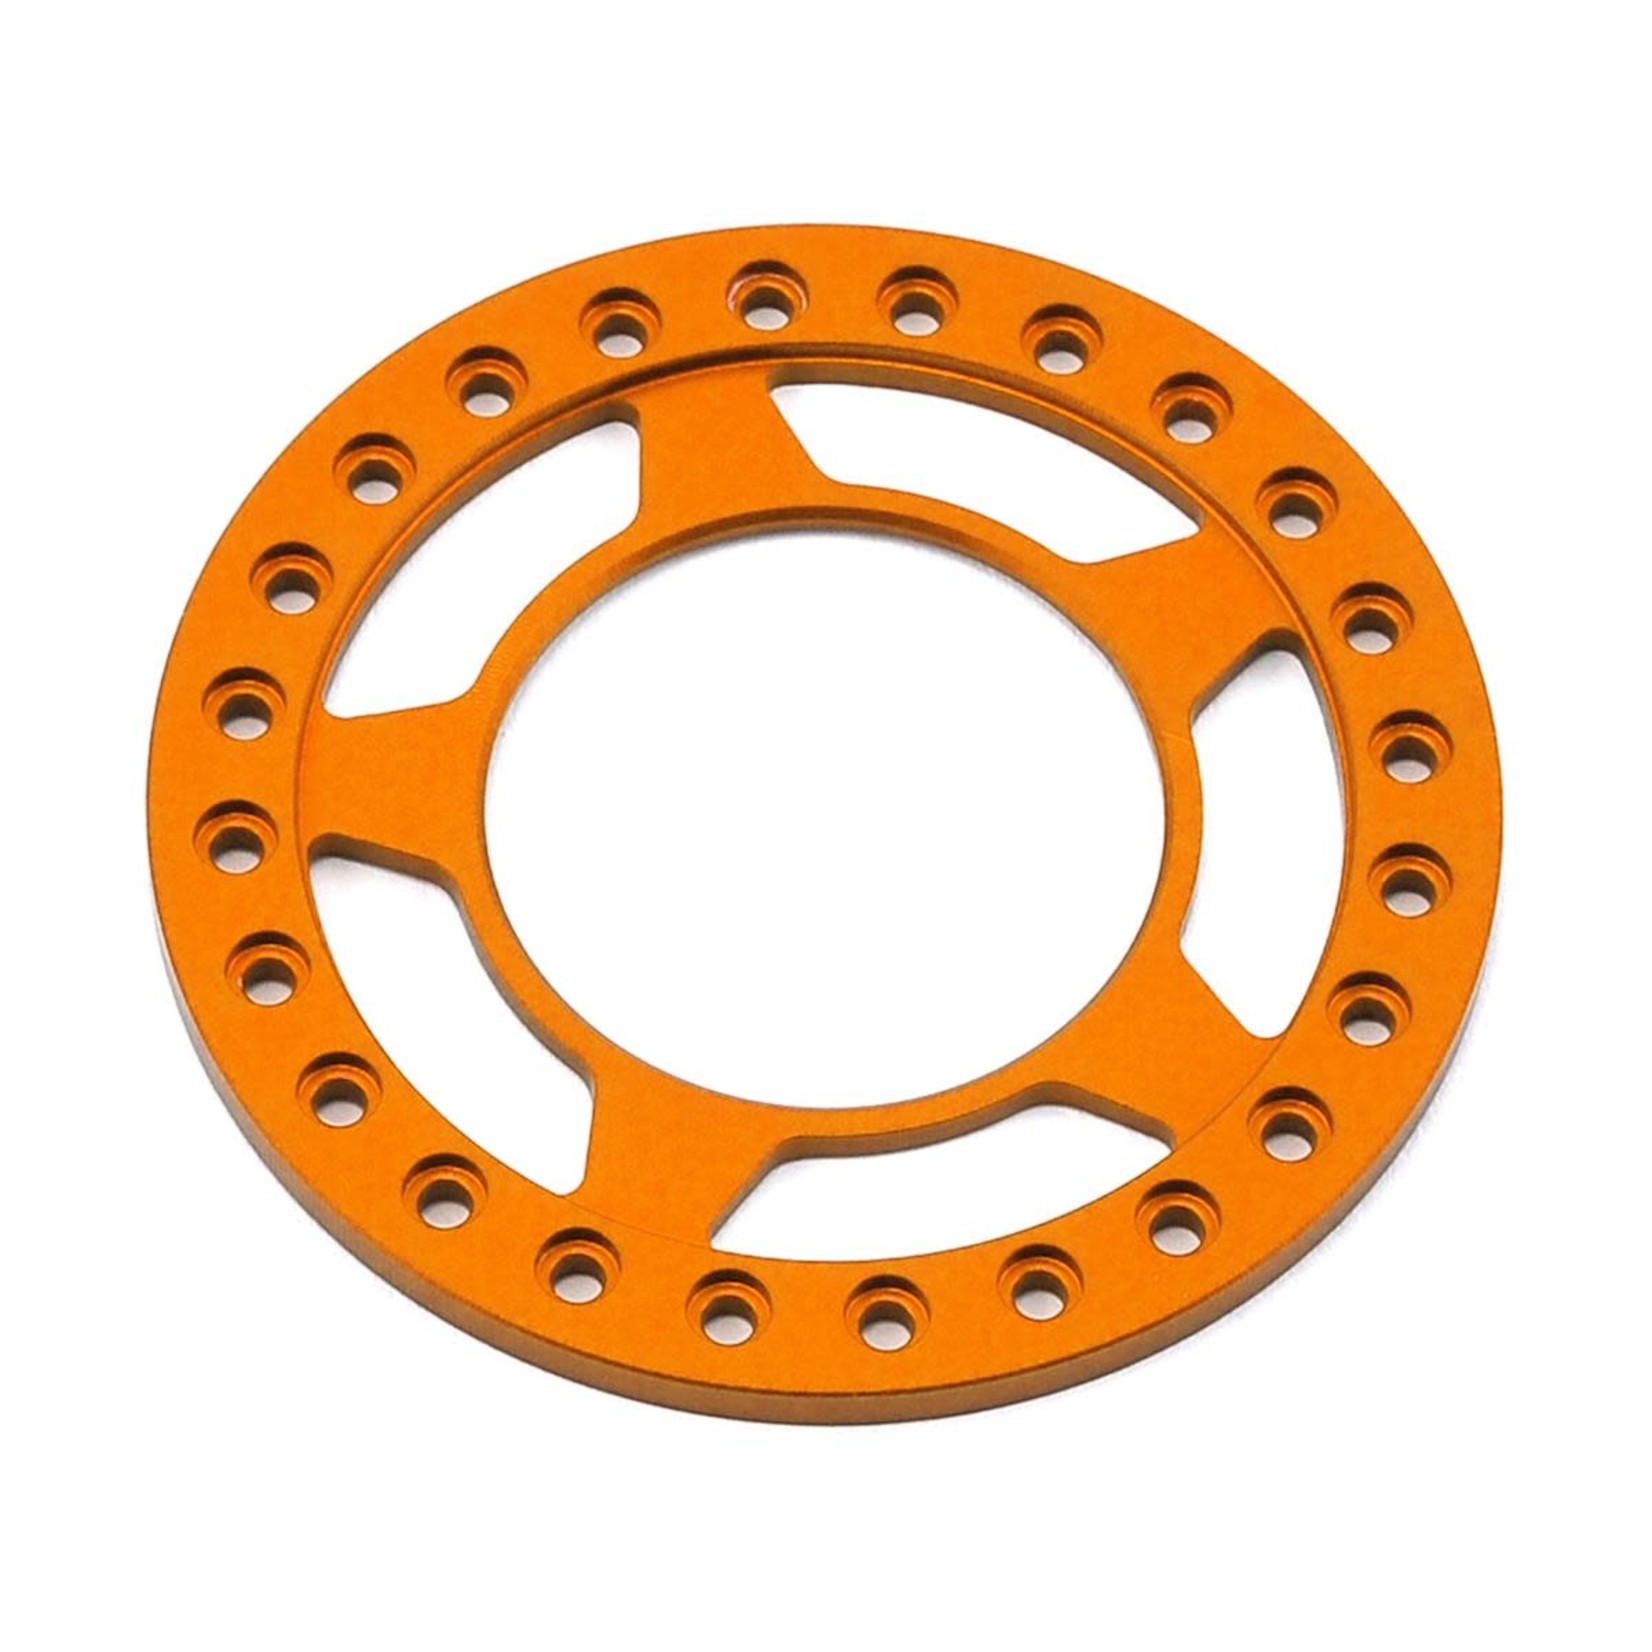 Vanquish Products Vanquish Products Spyder 1.9" Beadlock Ring (Orange) #VPS05146